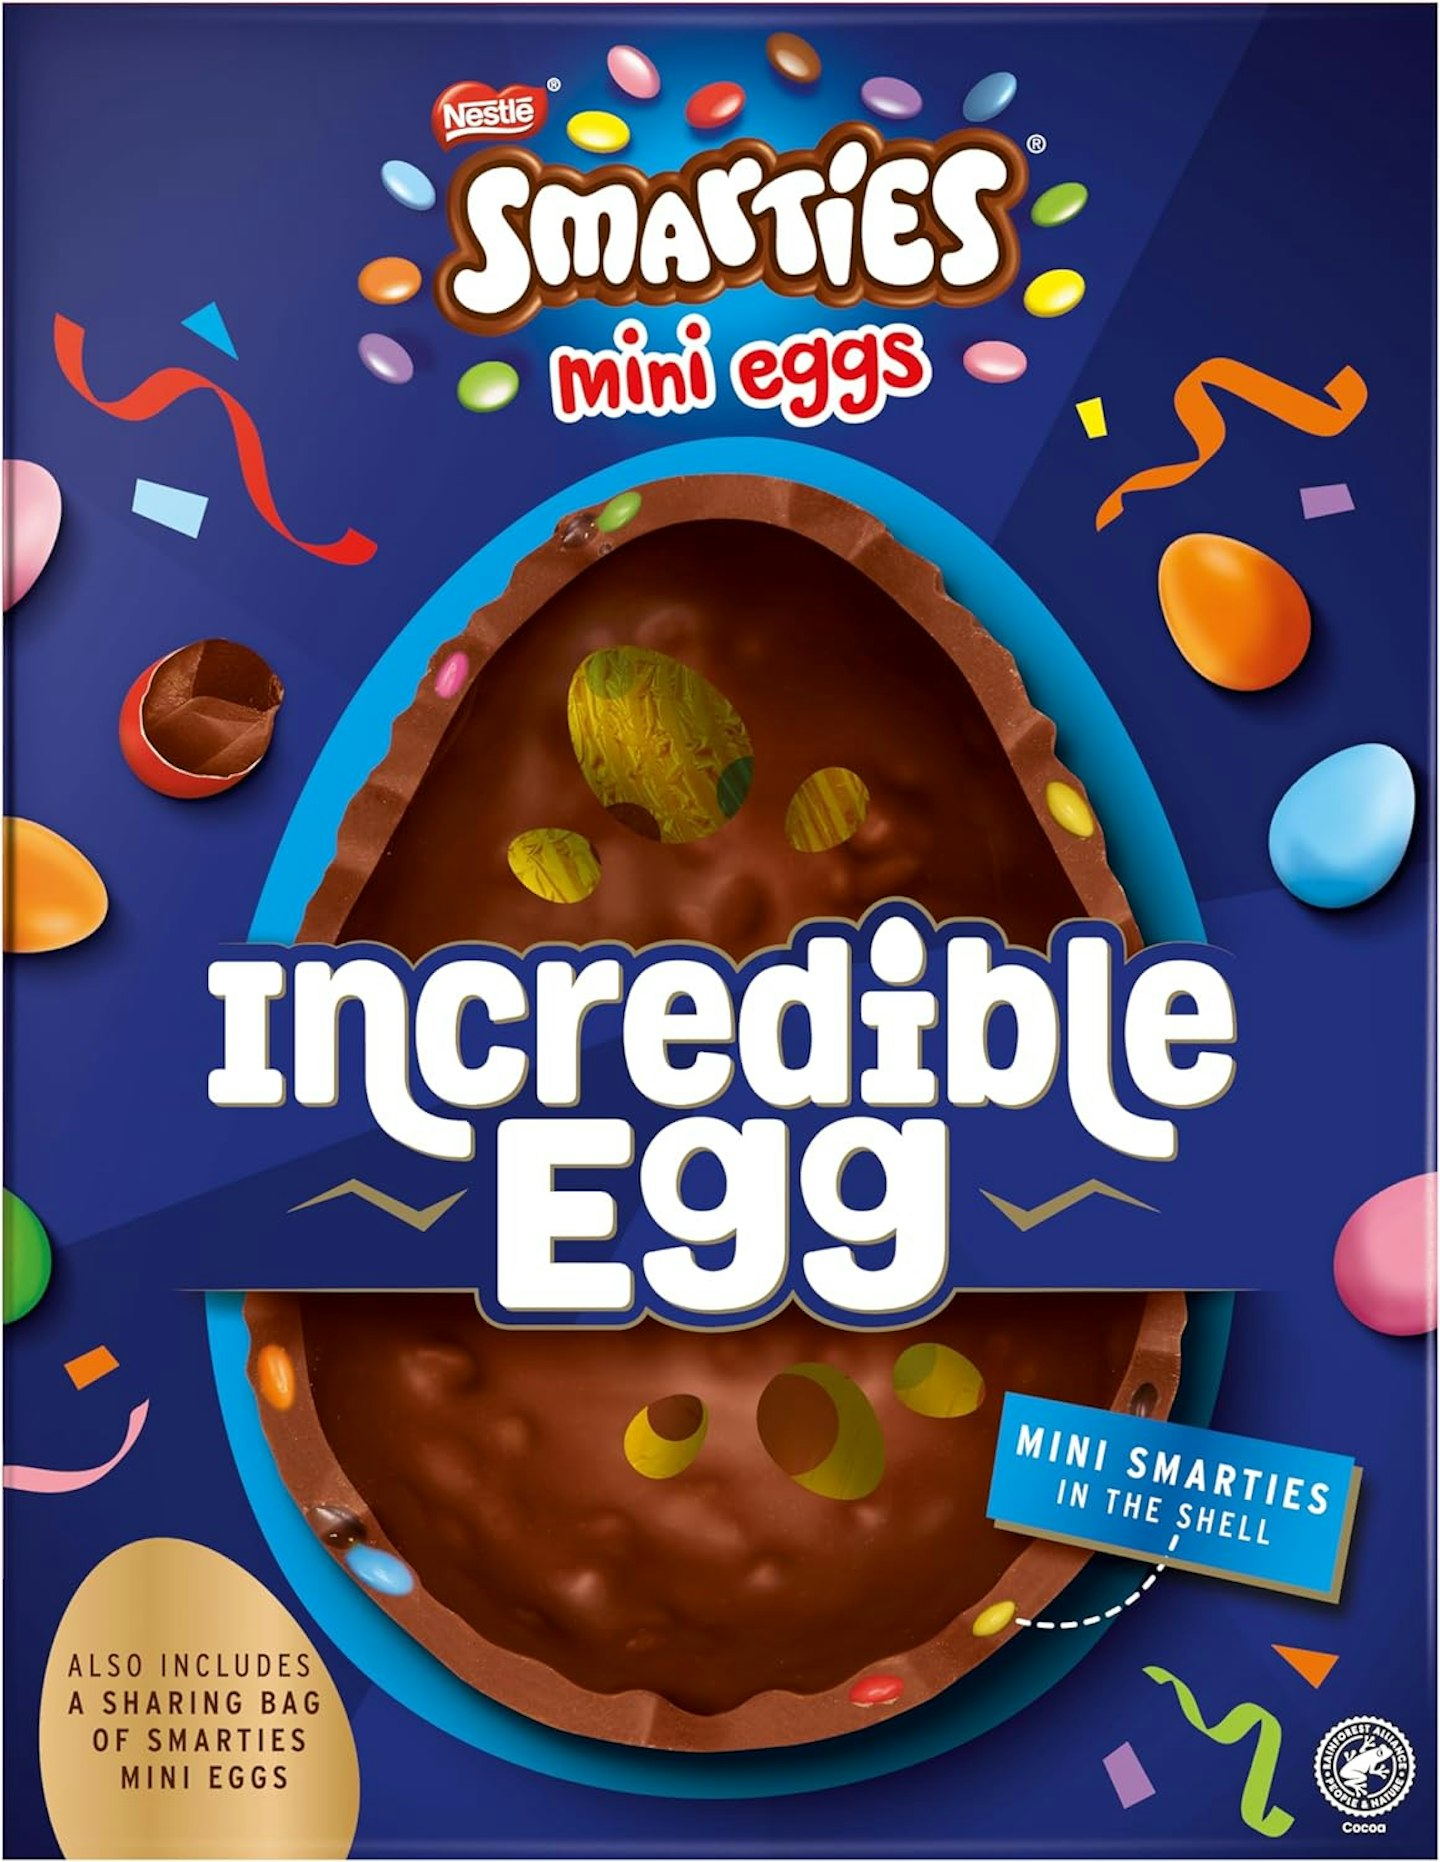 Nestlé Smarties Incredible Egg